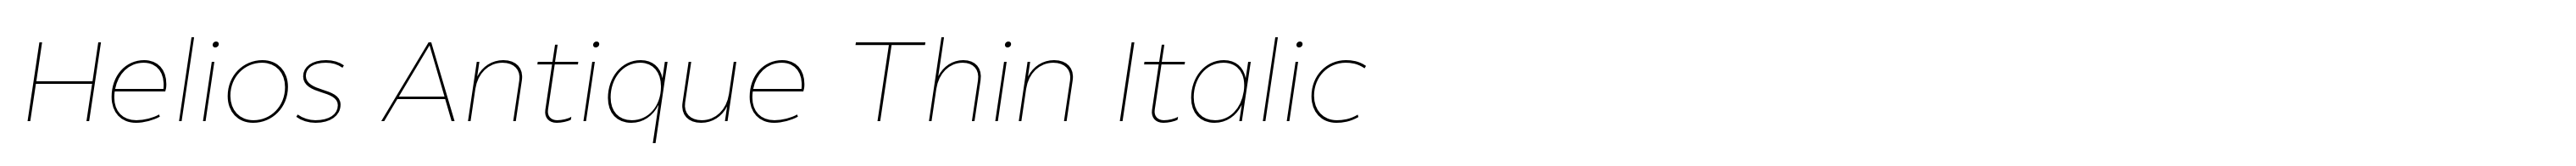 Helios Antique Thin Italic